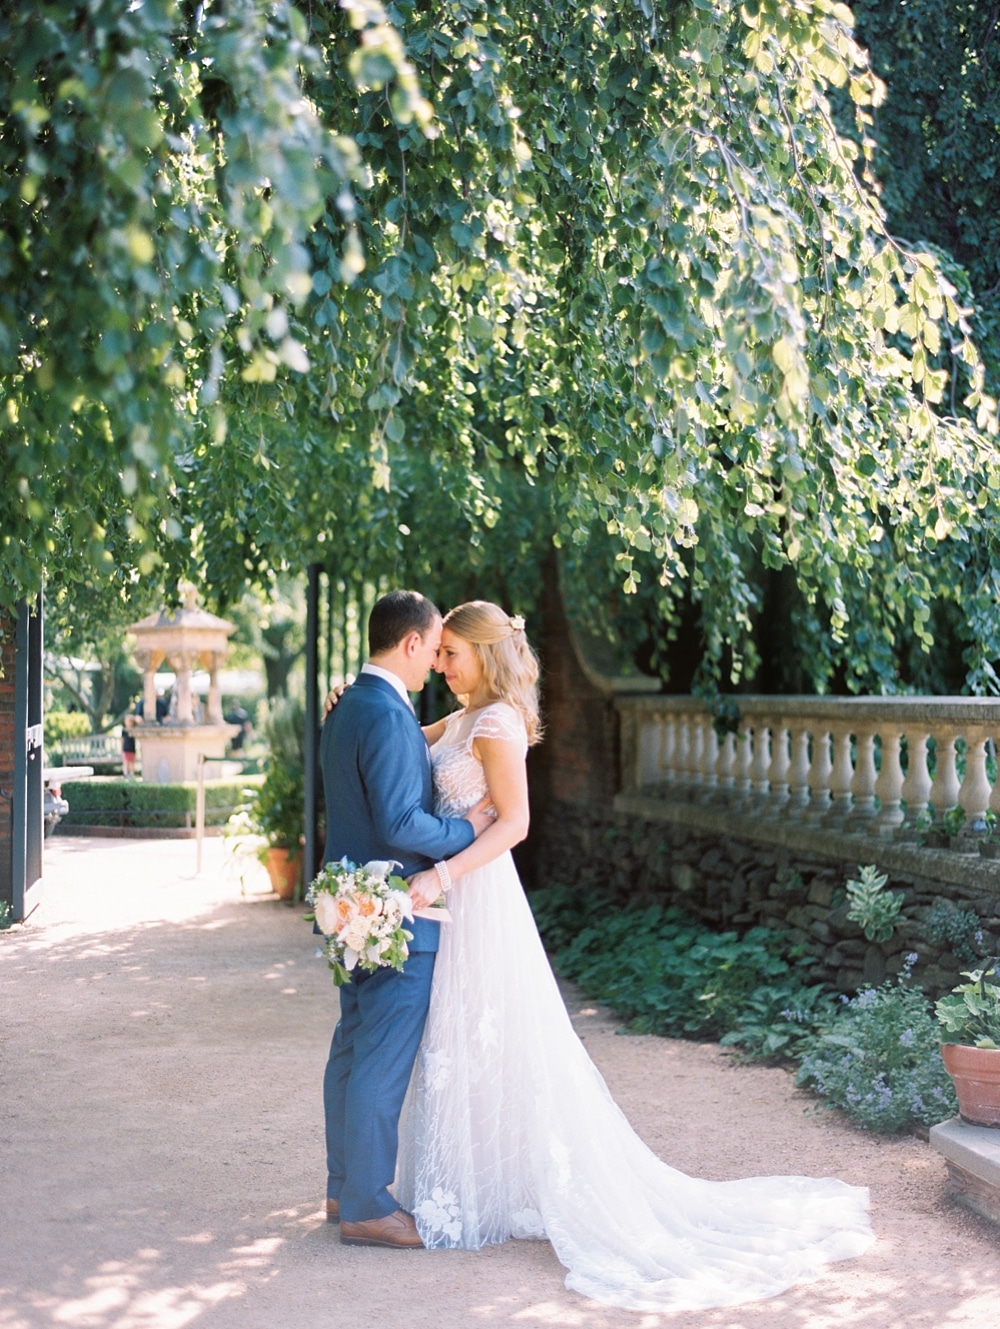 Kristin-La-Voie-Photography-Chicago-Botanic-Garden-Wedding-Photographer-31